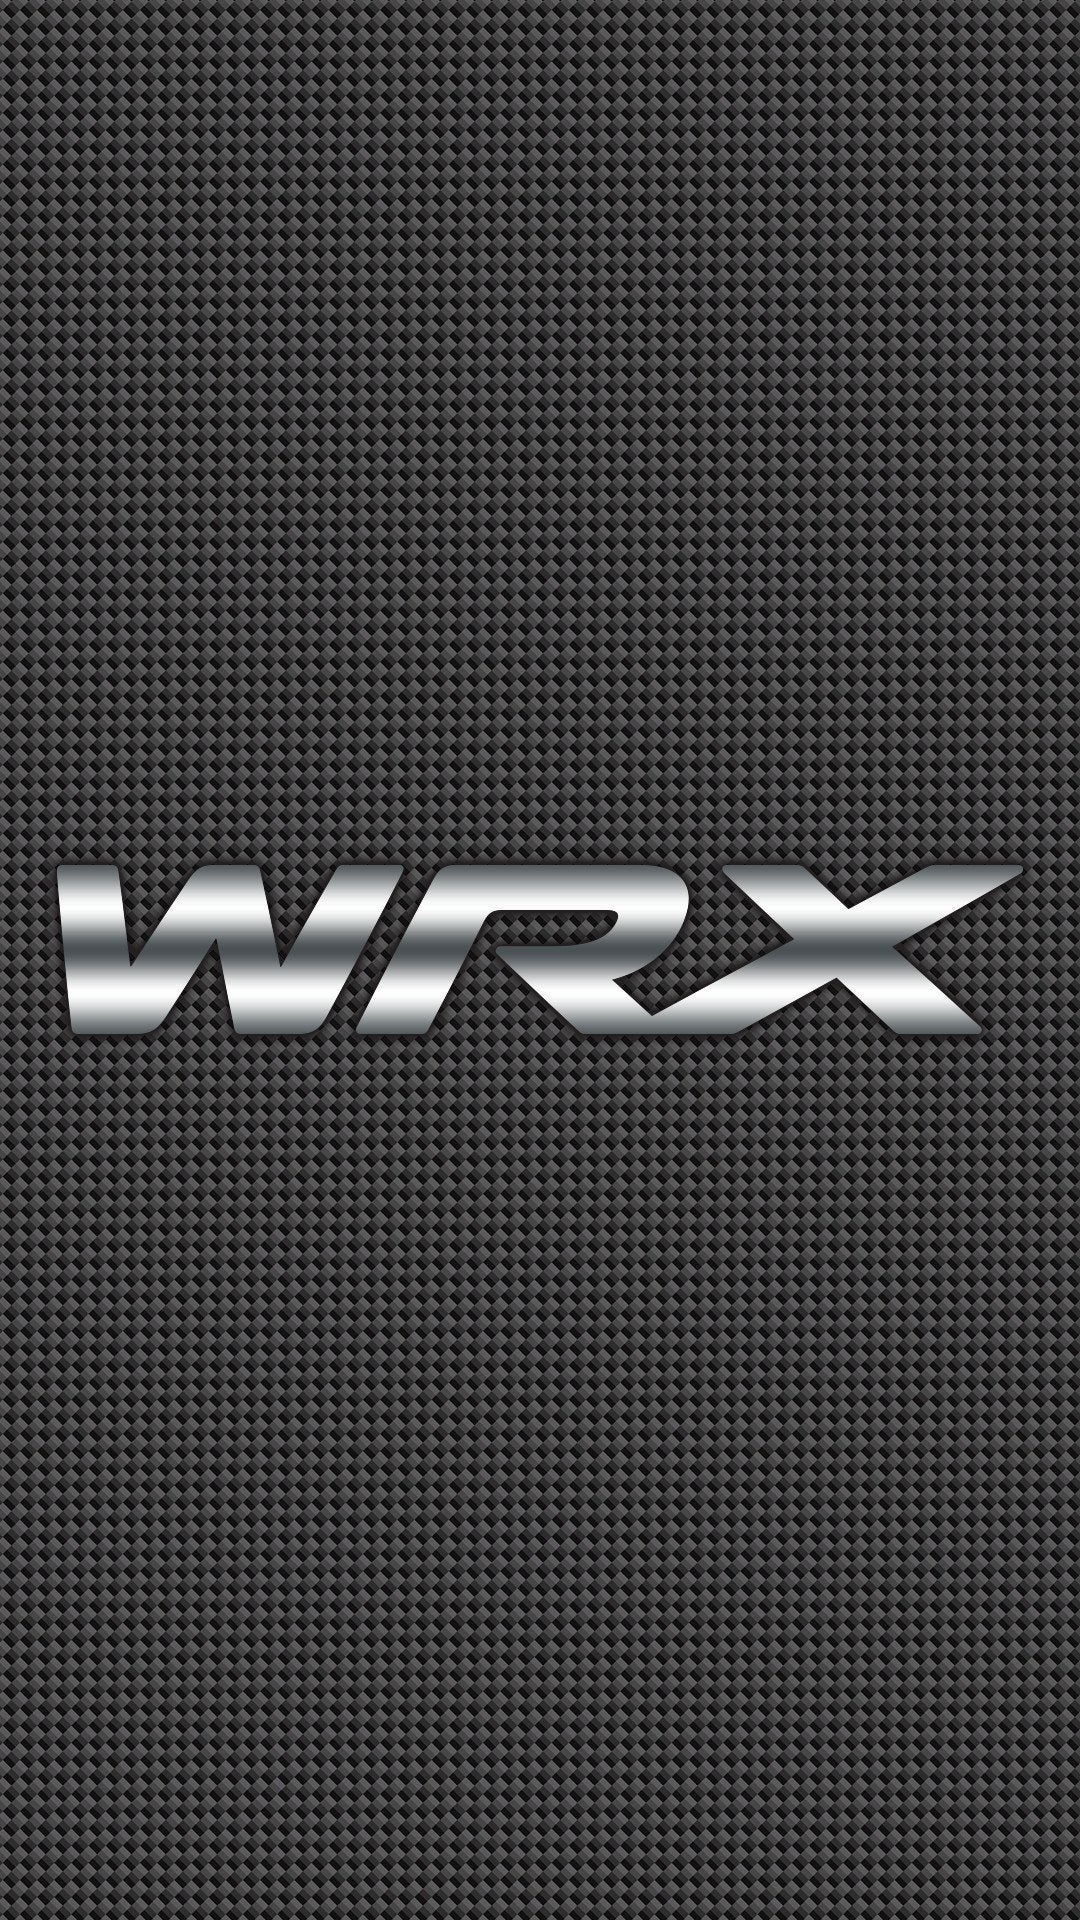 Wrx Logo Wallpapers